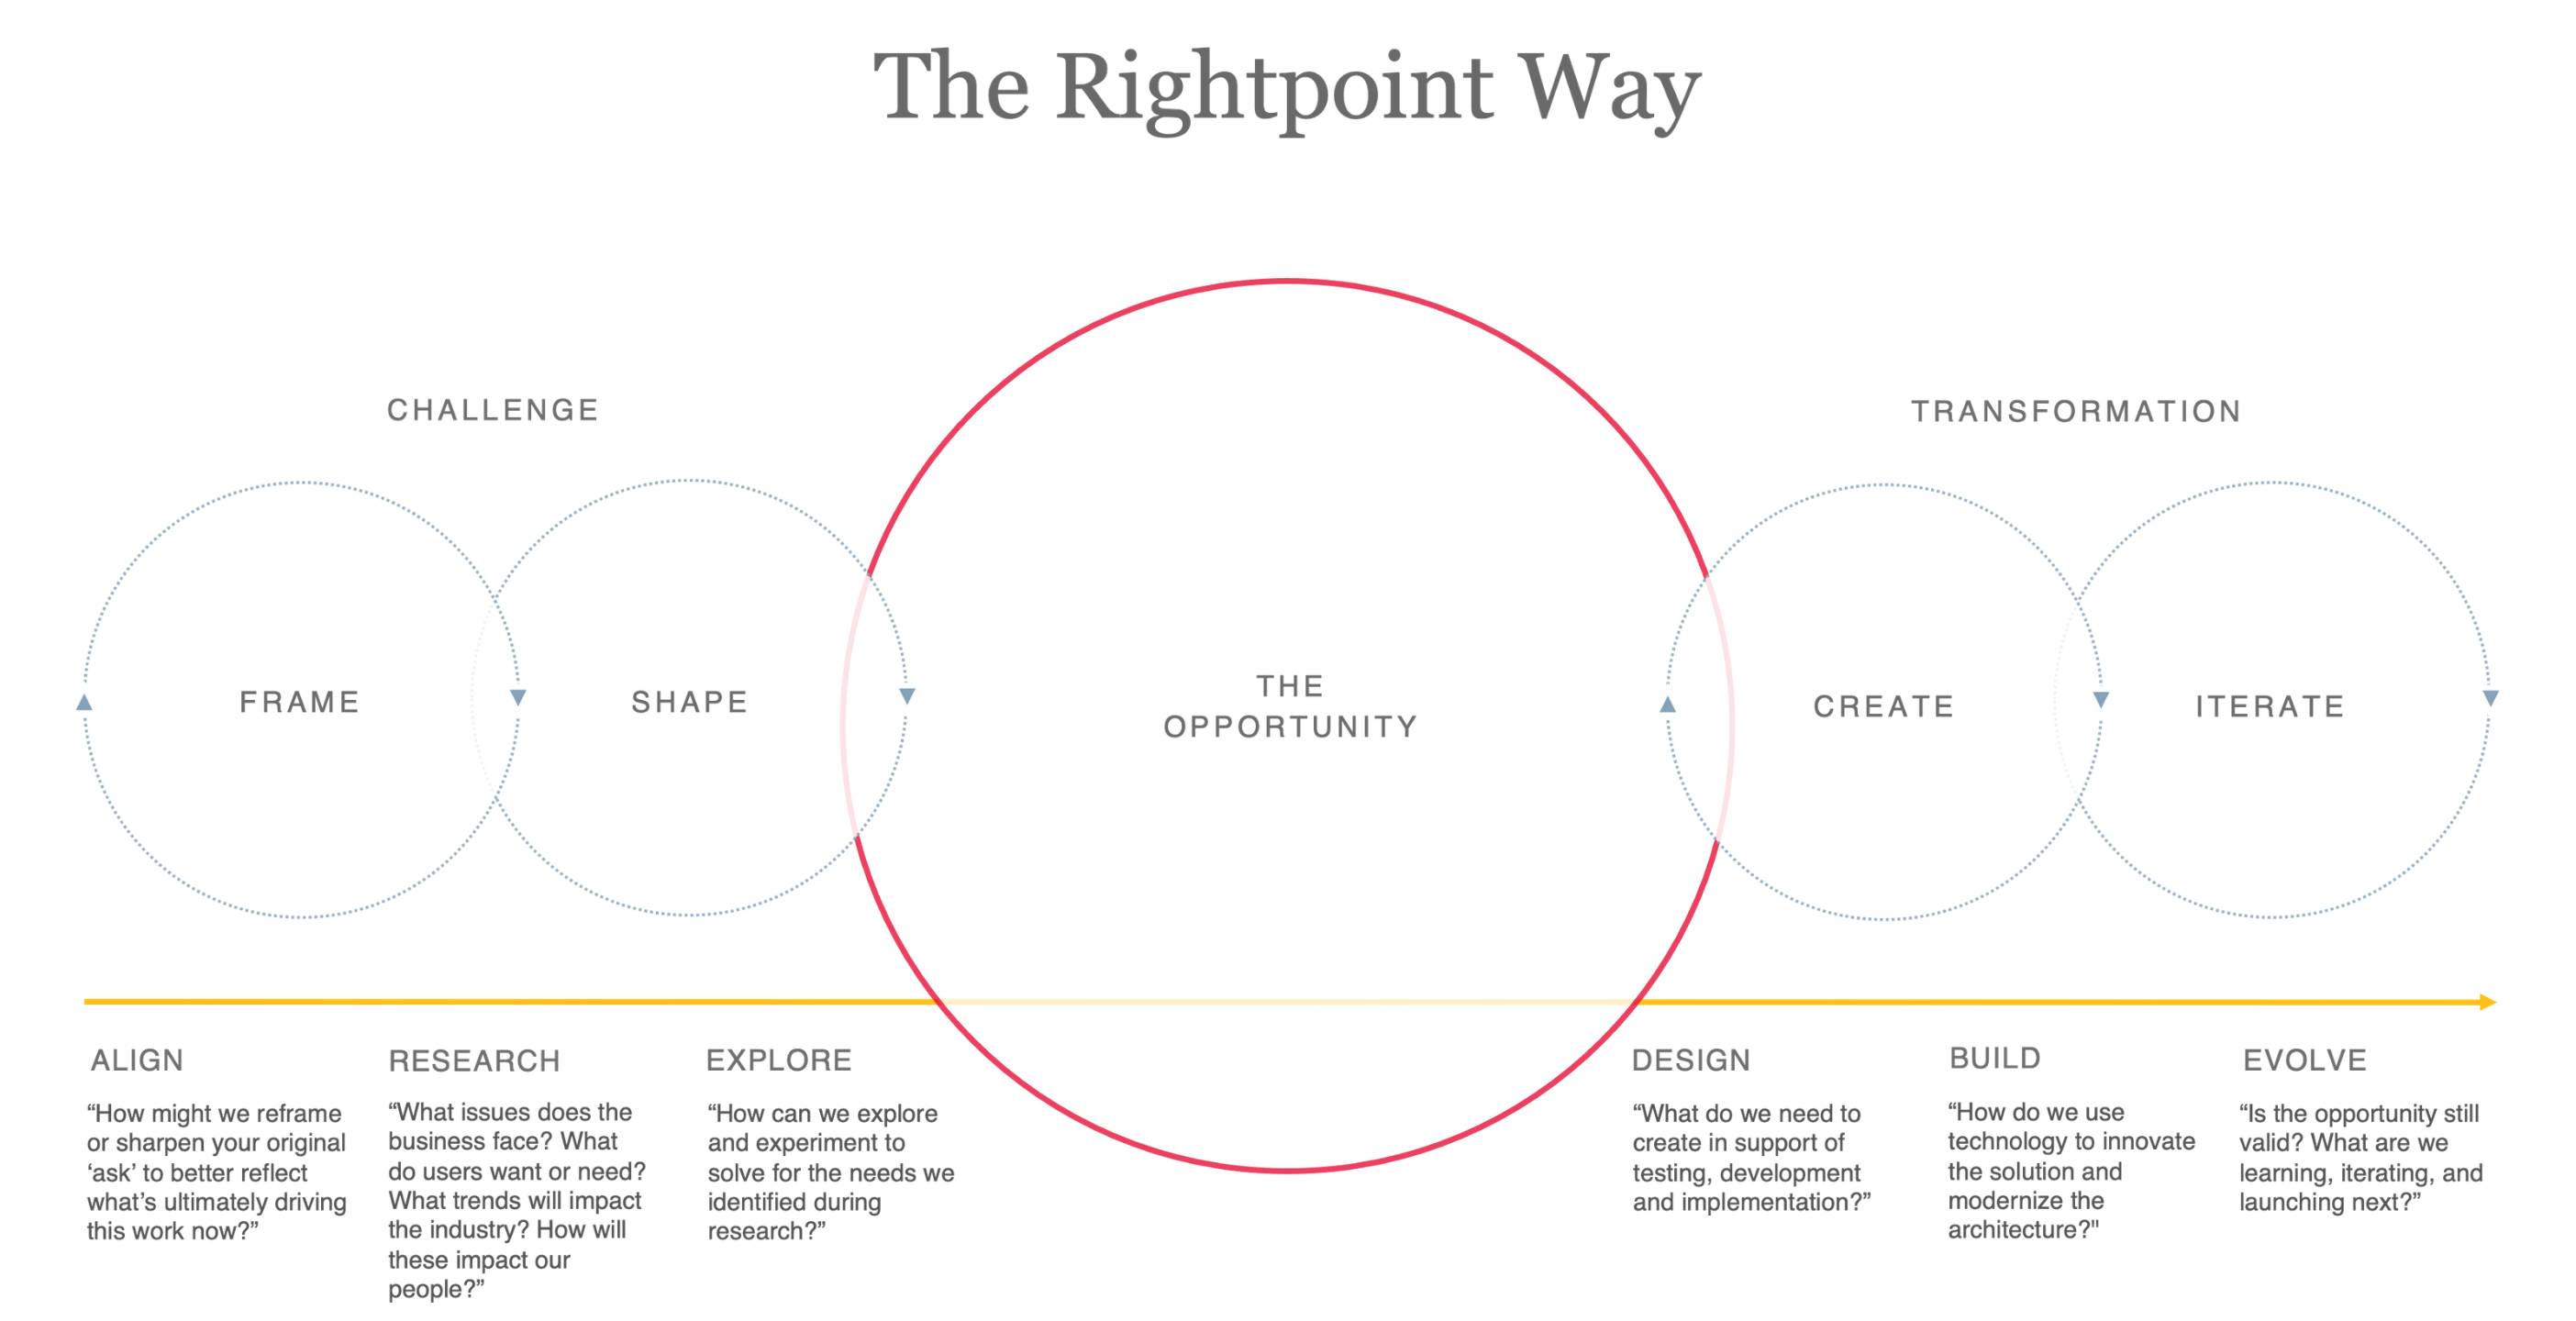 The Rightpoint Way methodology 